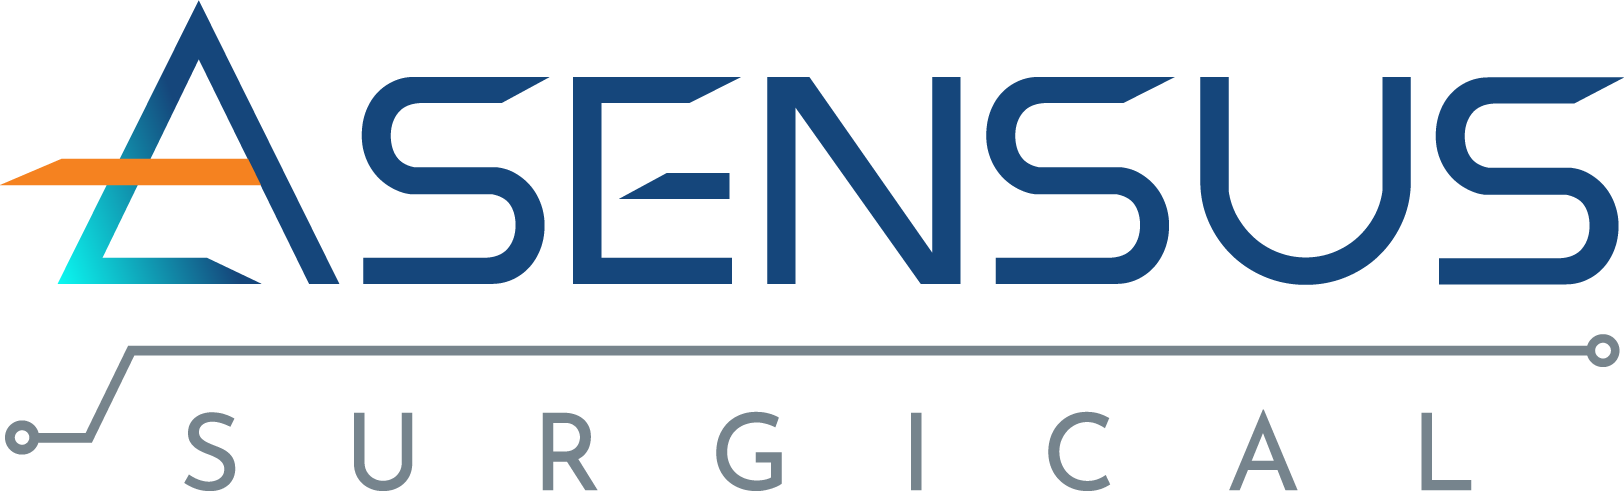 Asensus Surgical logo large (transparent PNG)